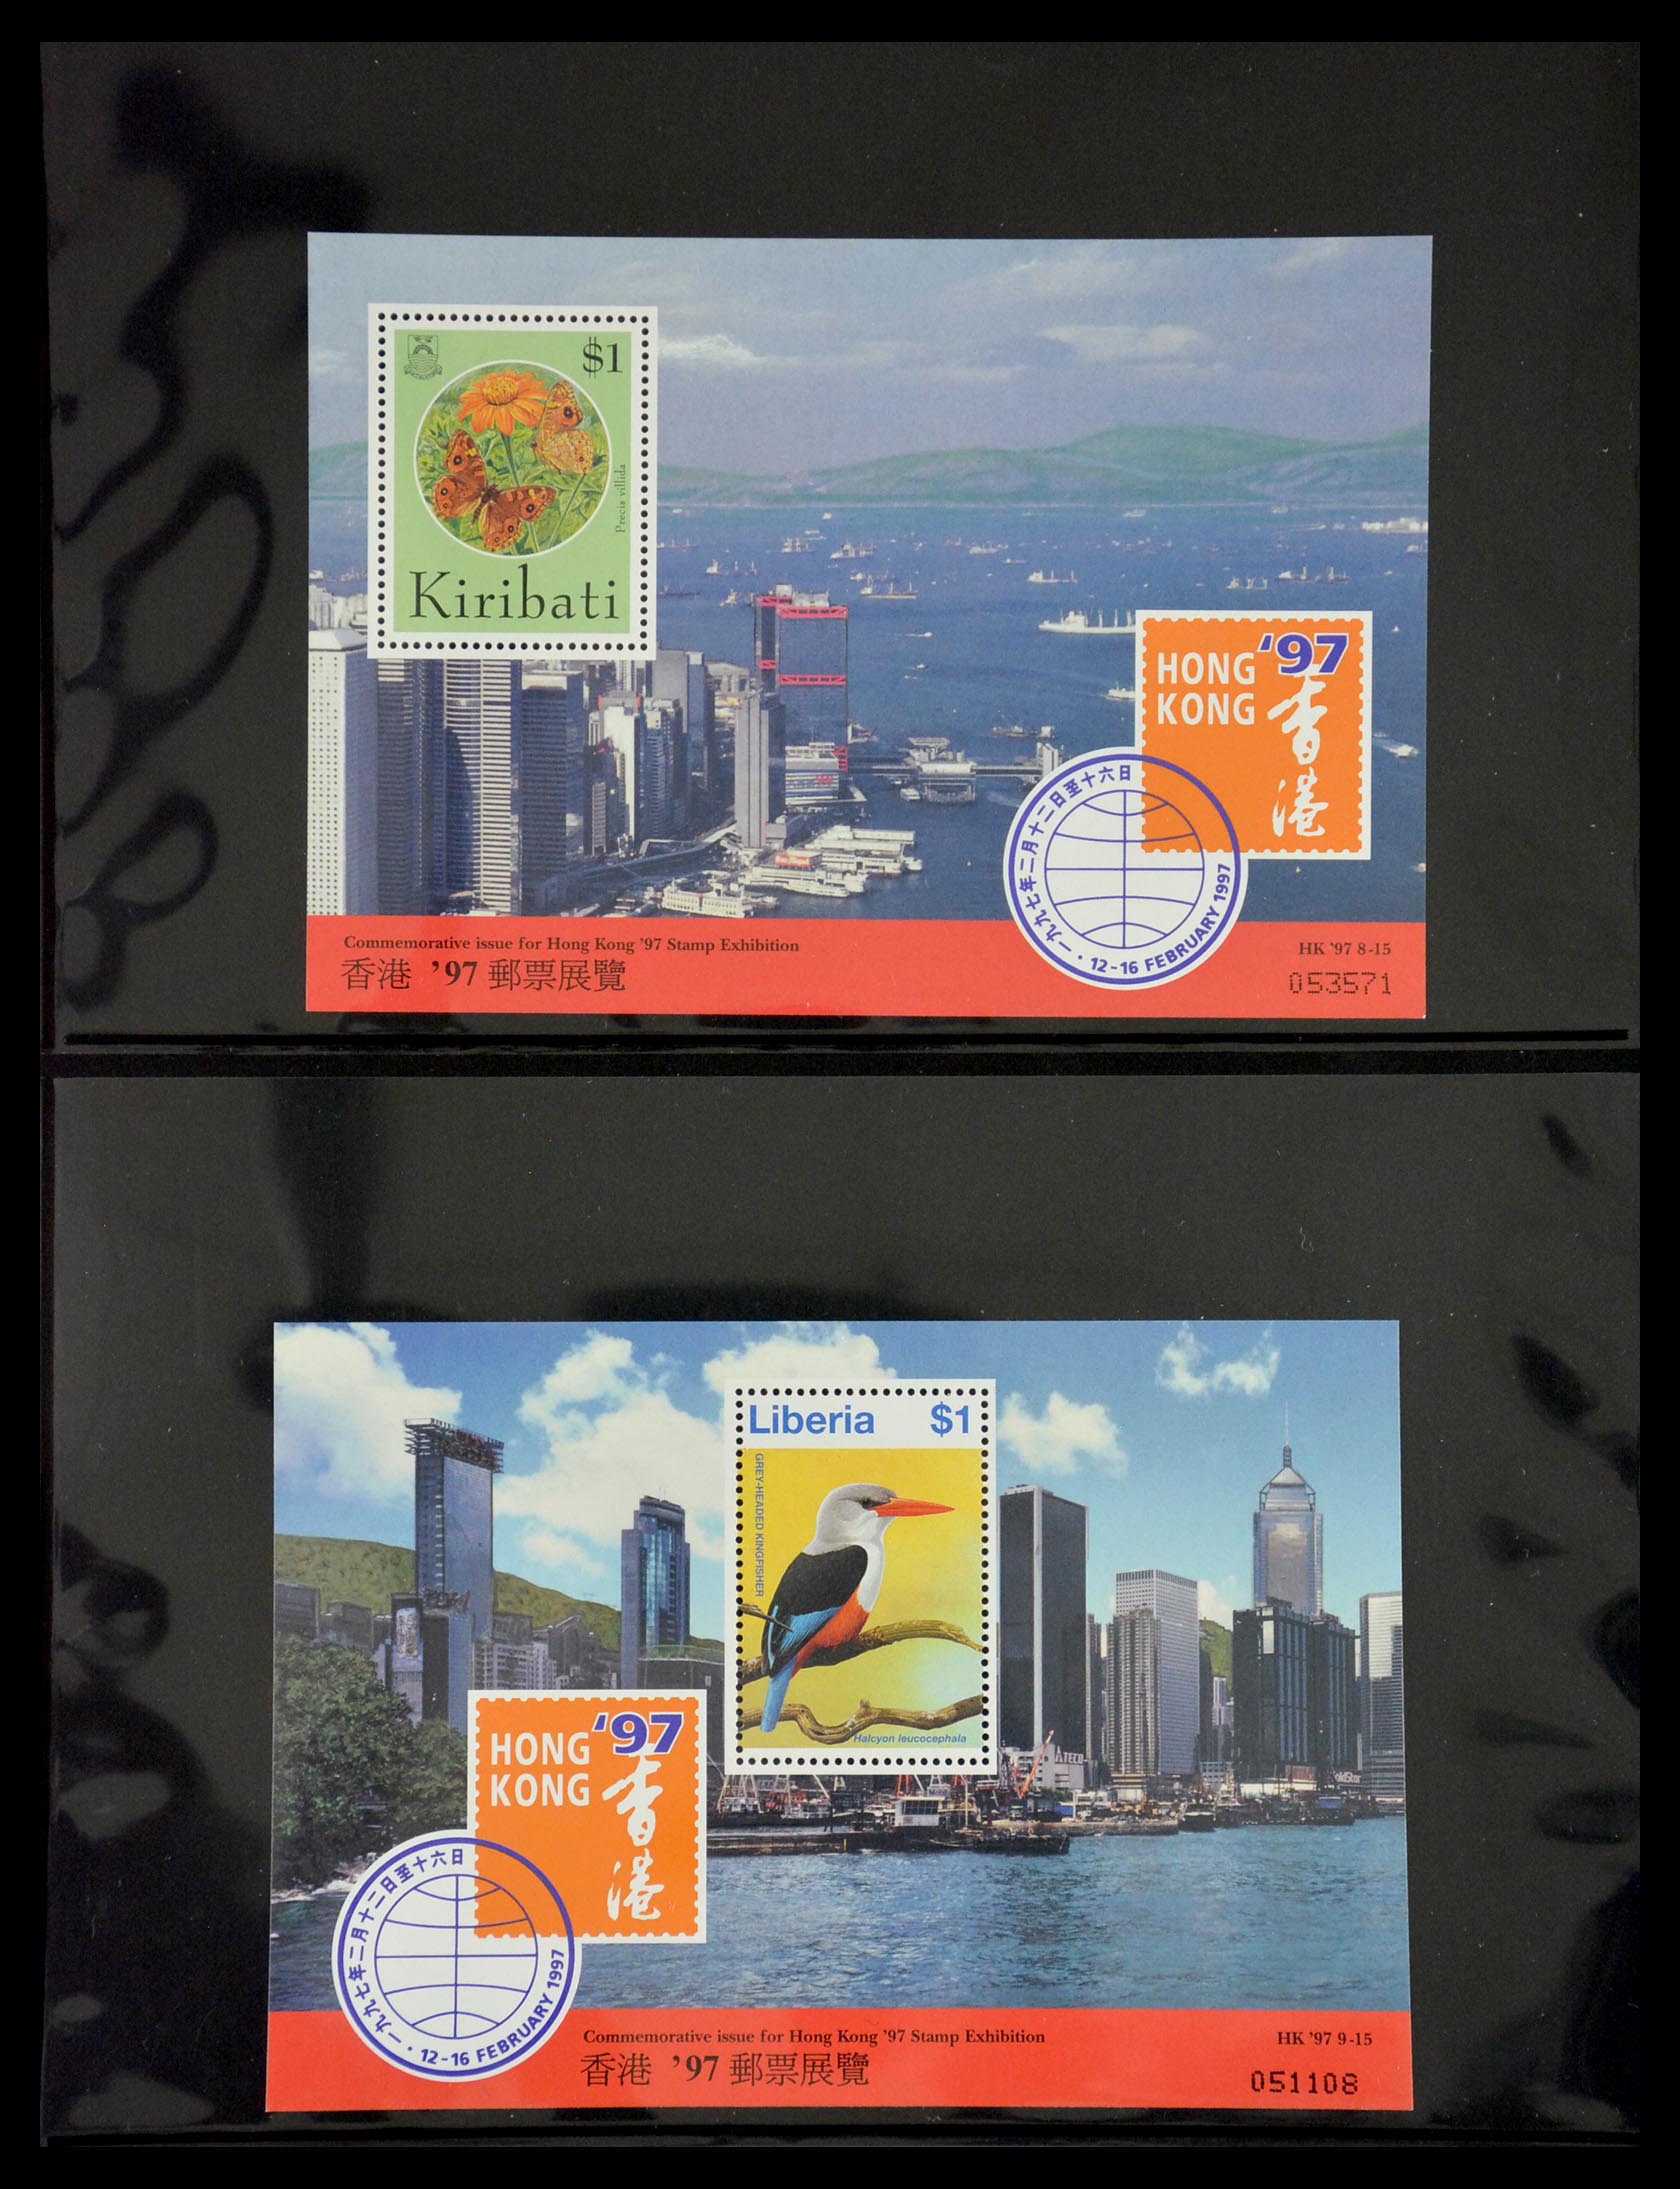 29630 106 - 29630 Hongkong 1981-2014.